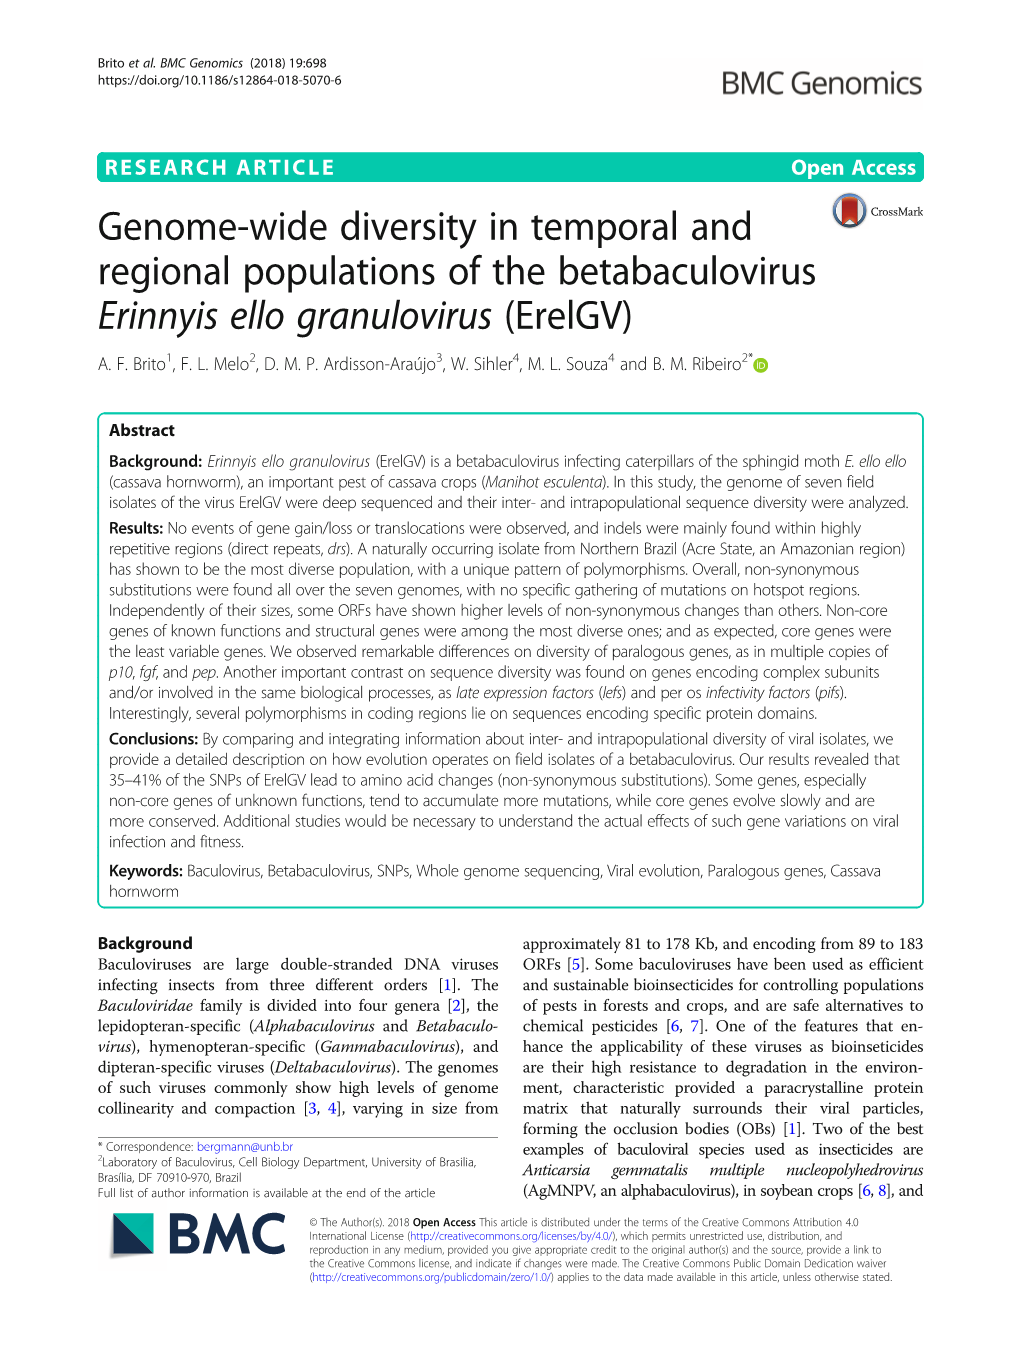 Genome-Wide Diversity in Temporal and Regional Populations of the Betabaculovirus Erinnyis Ello Granulovirus (Erelgv) A